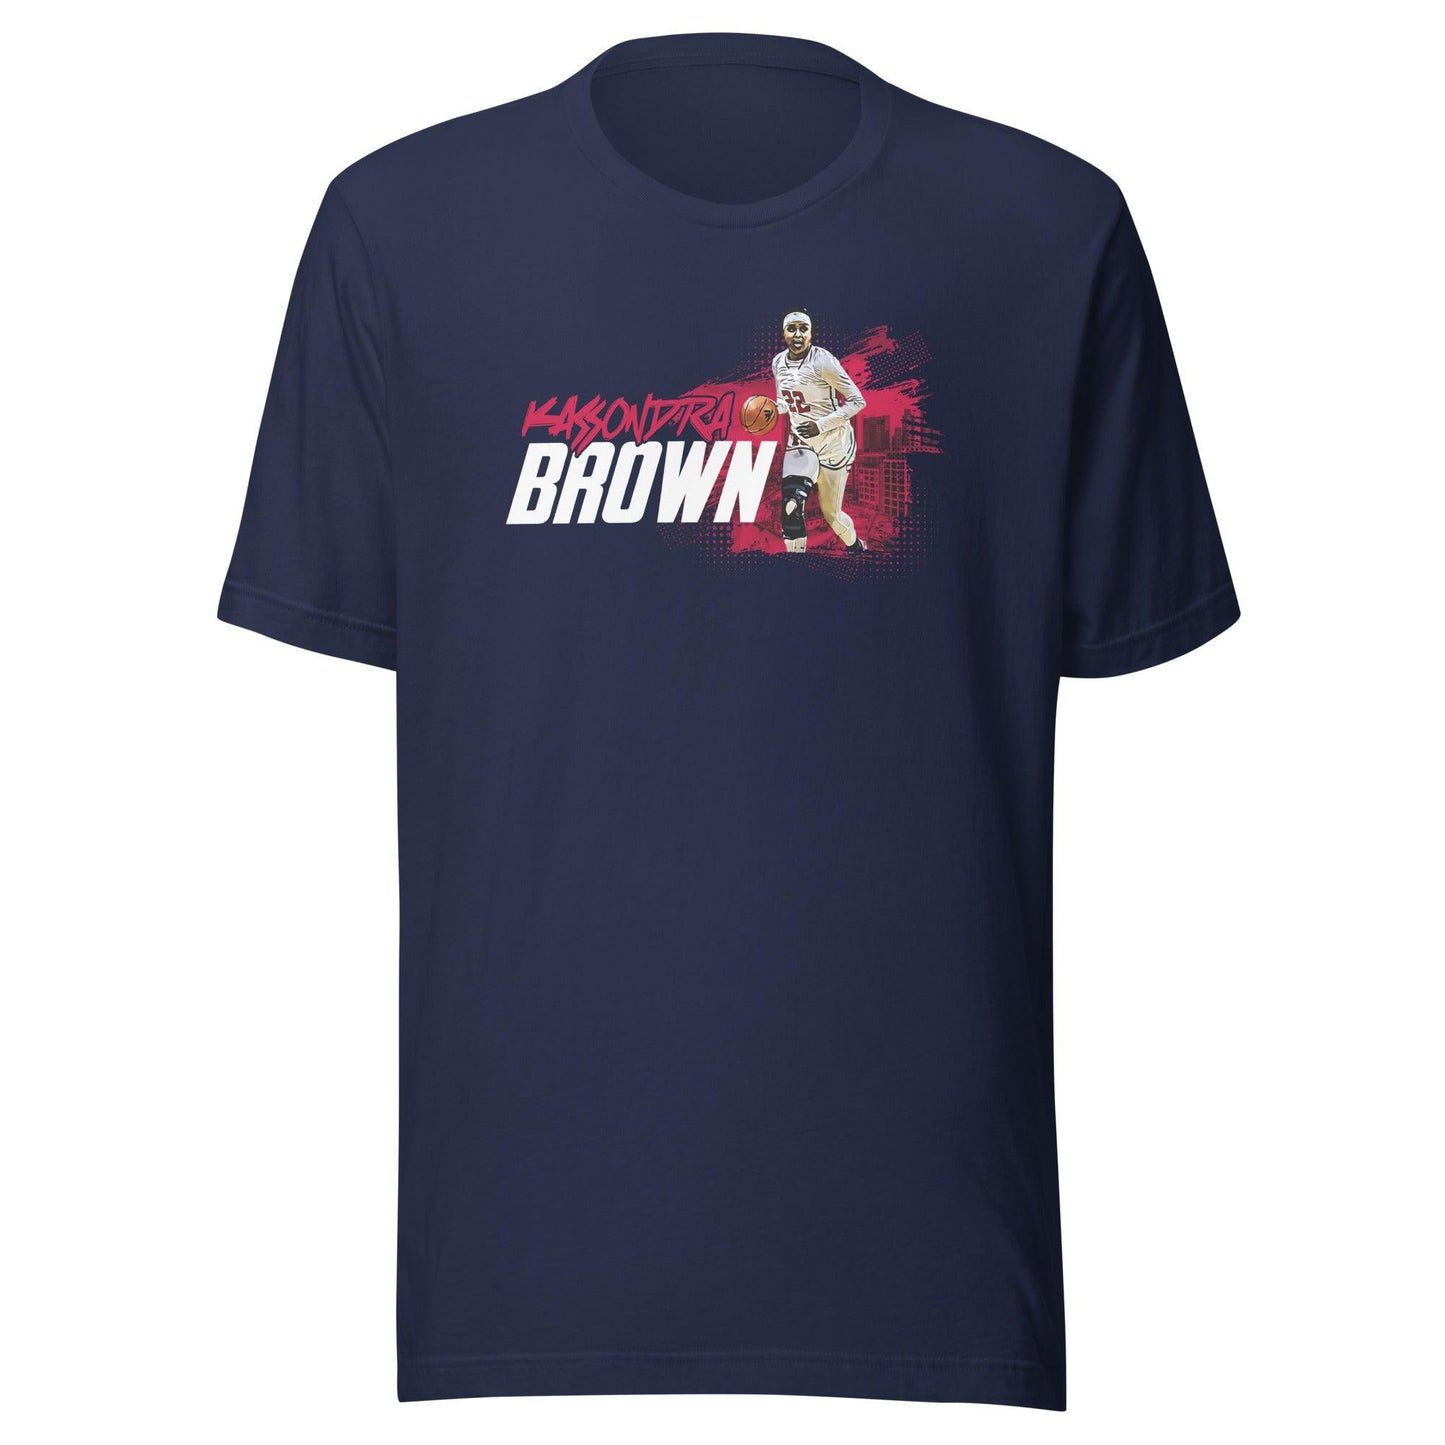 Kassondra Brown "Essential" T-shirt - Fan Arch